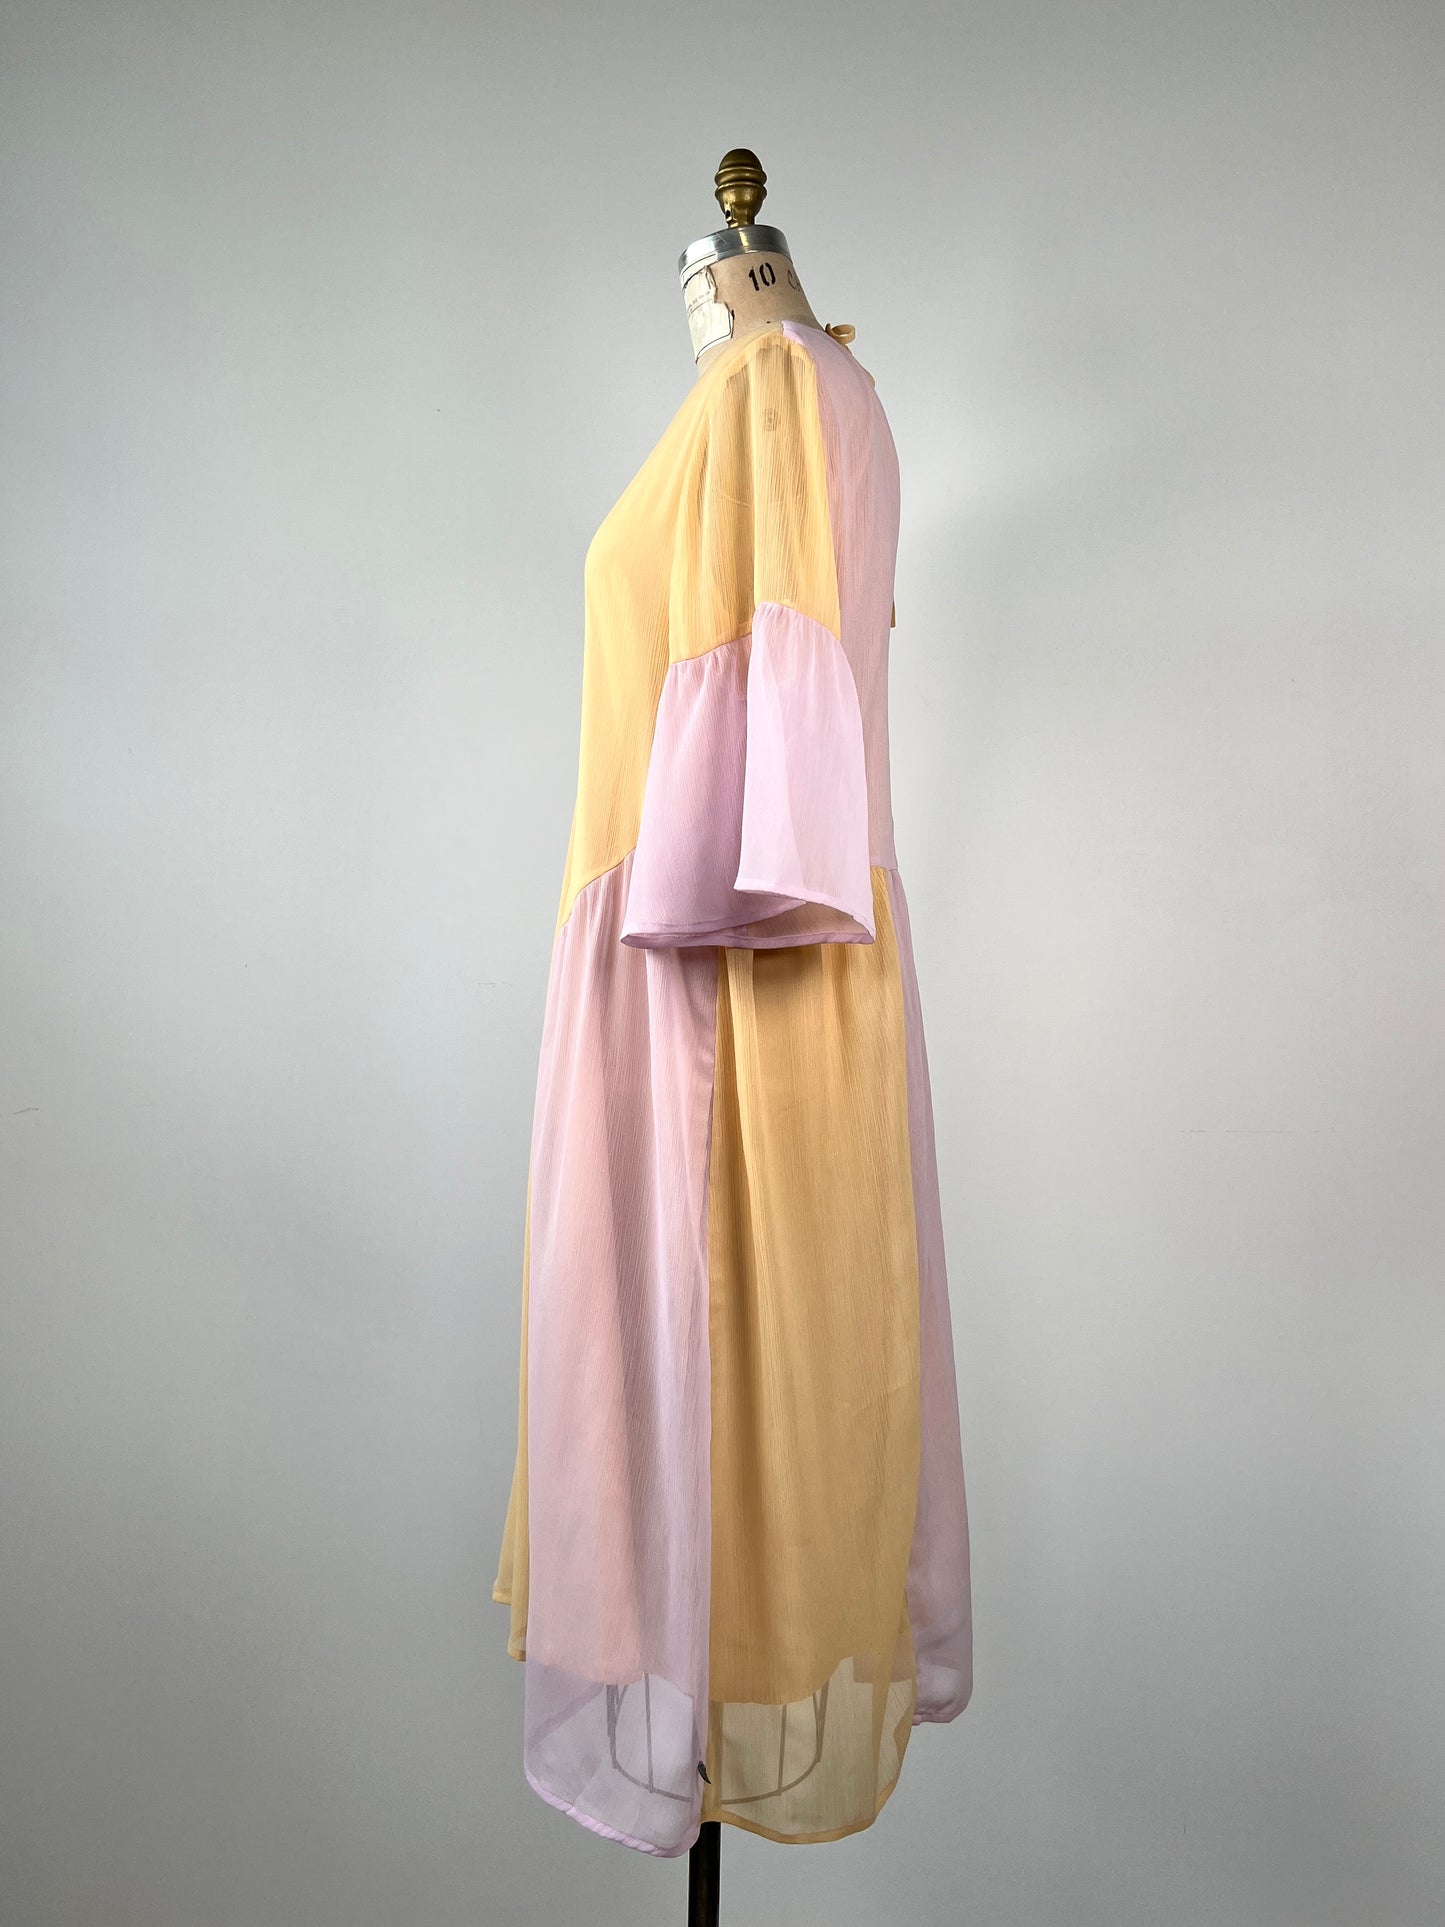 Robe de fée oversized en crêpe pêche et lilas (6)